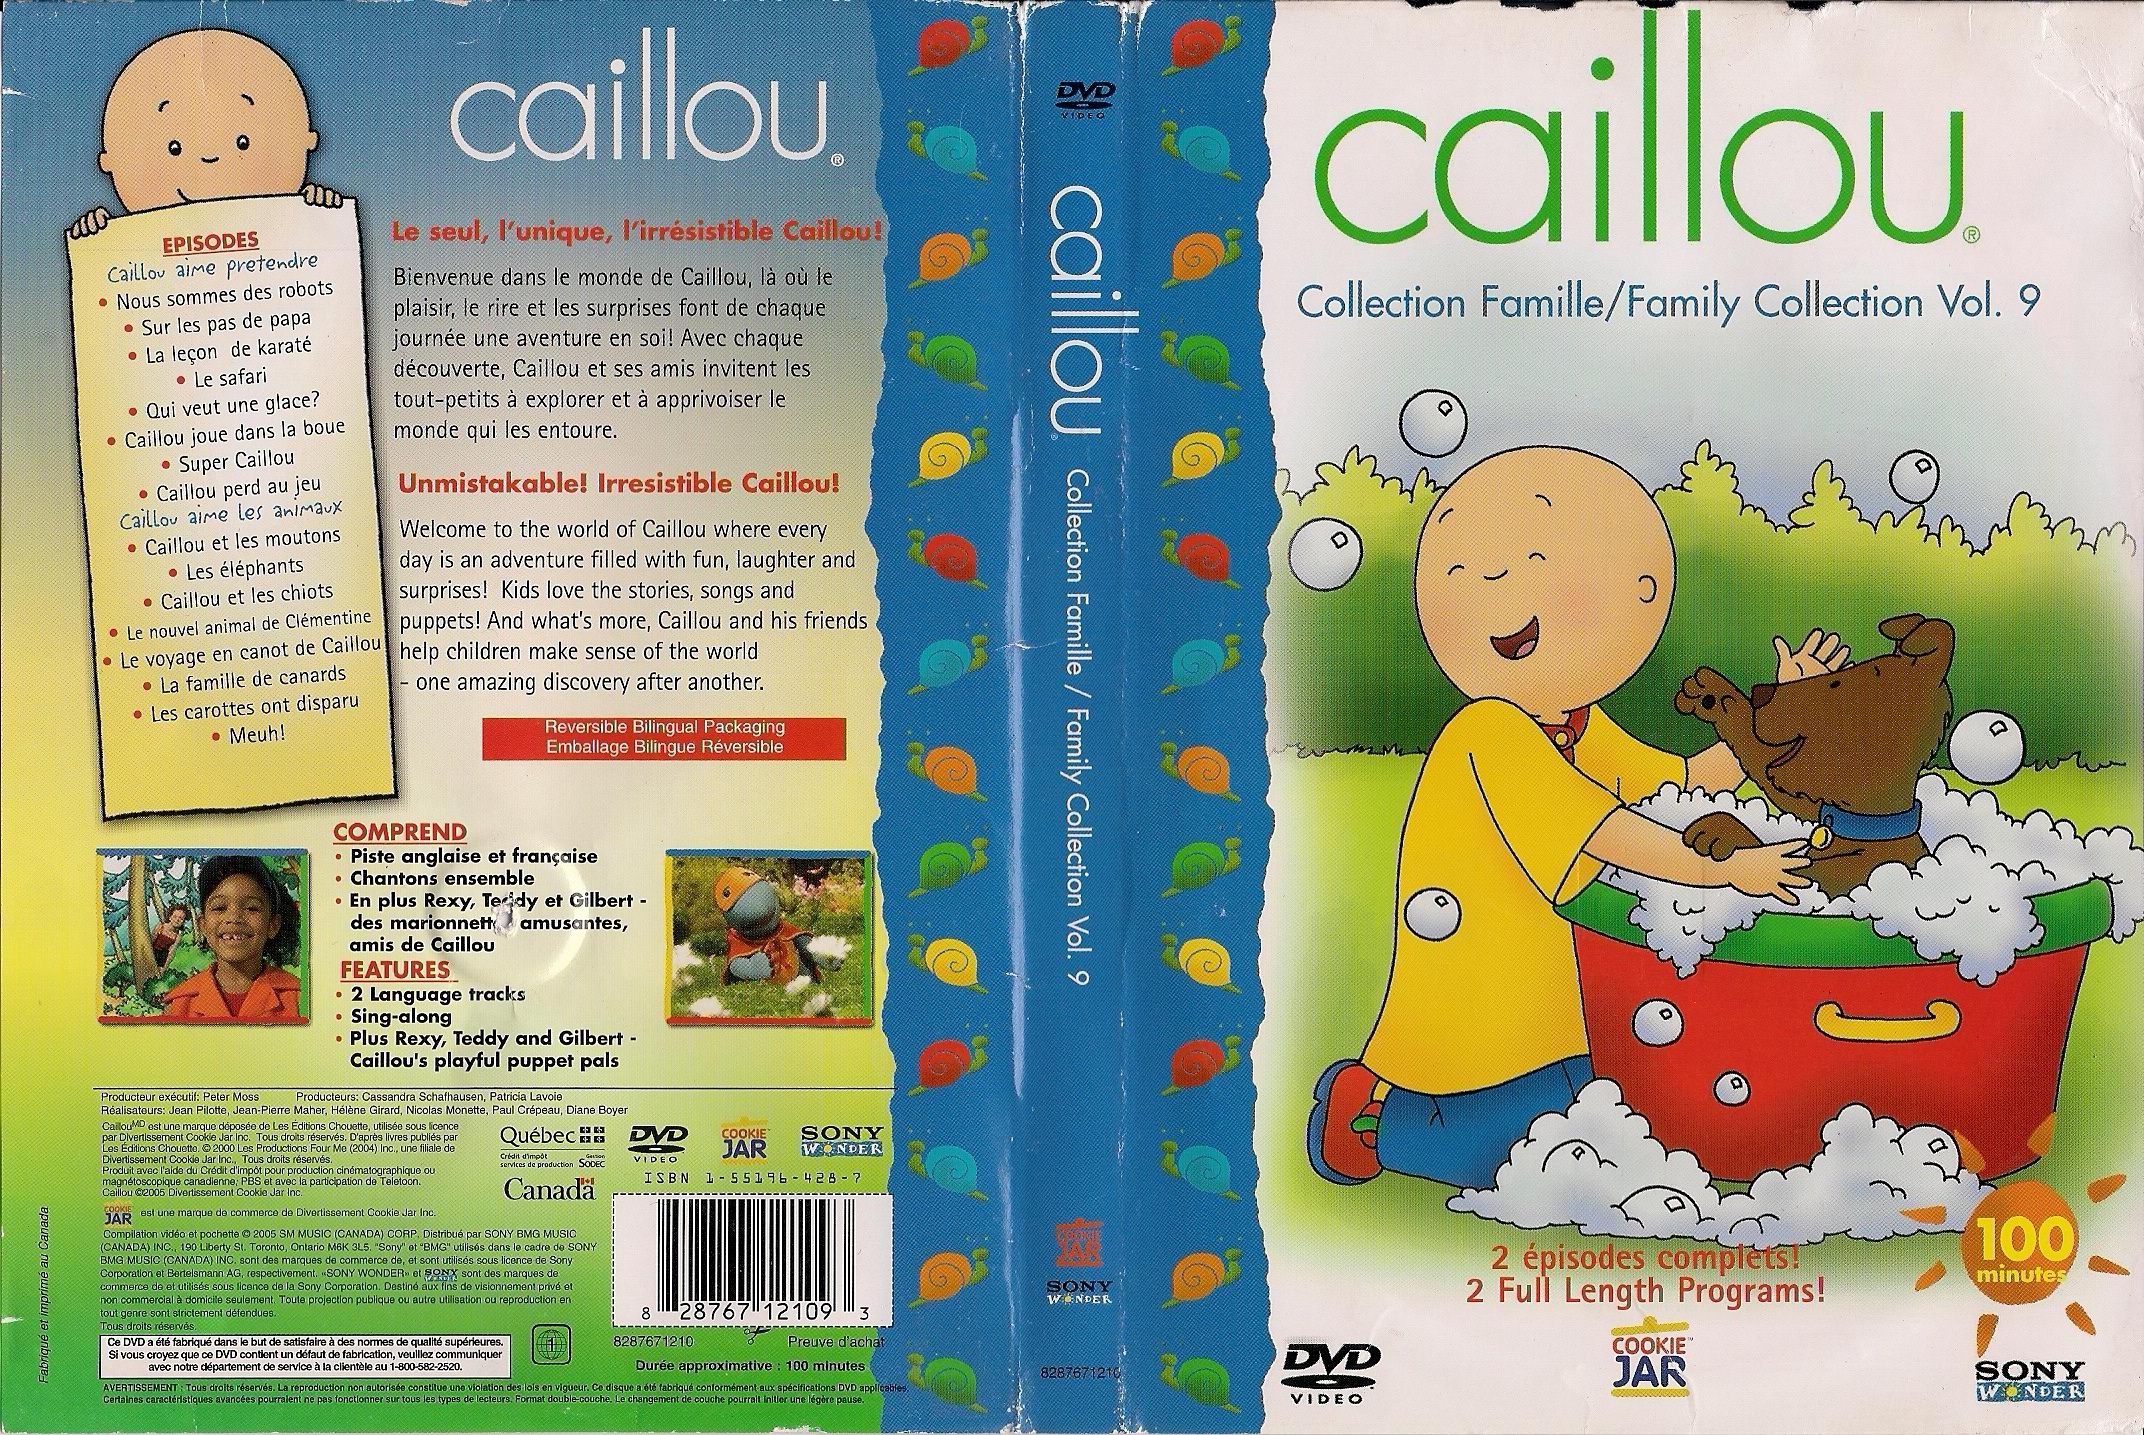 Jaquette DVD Caillou vol 9 (Canadienne)